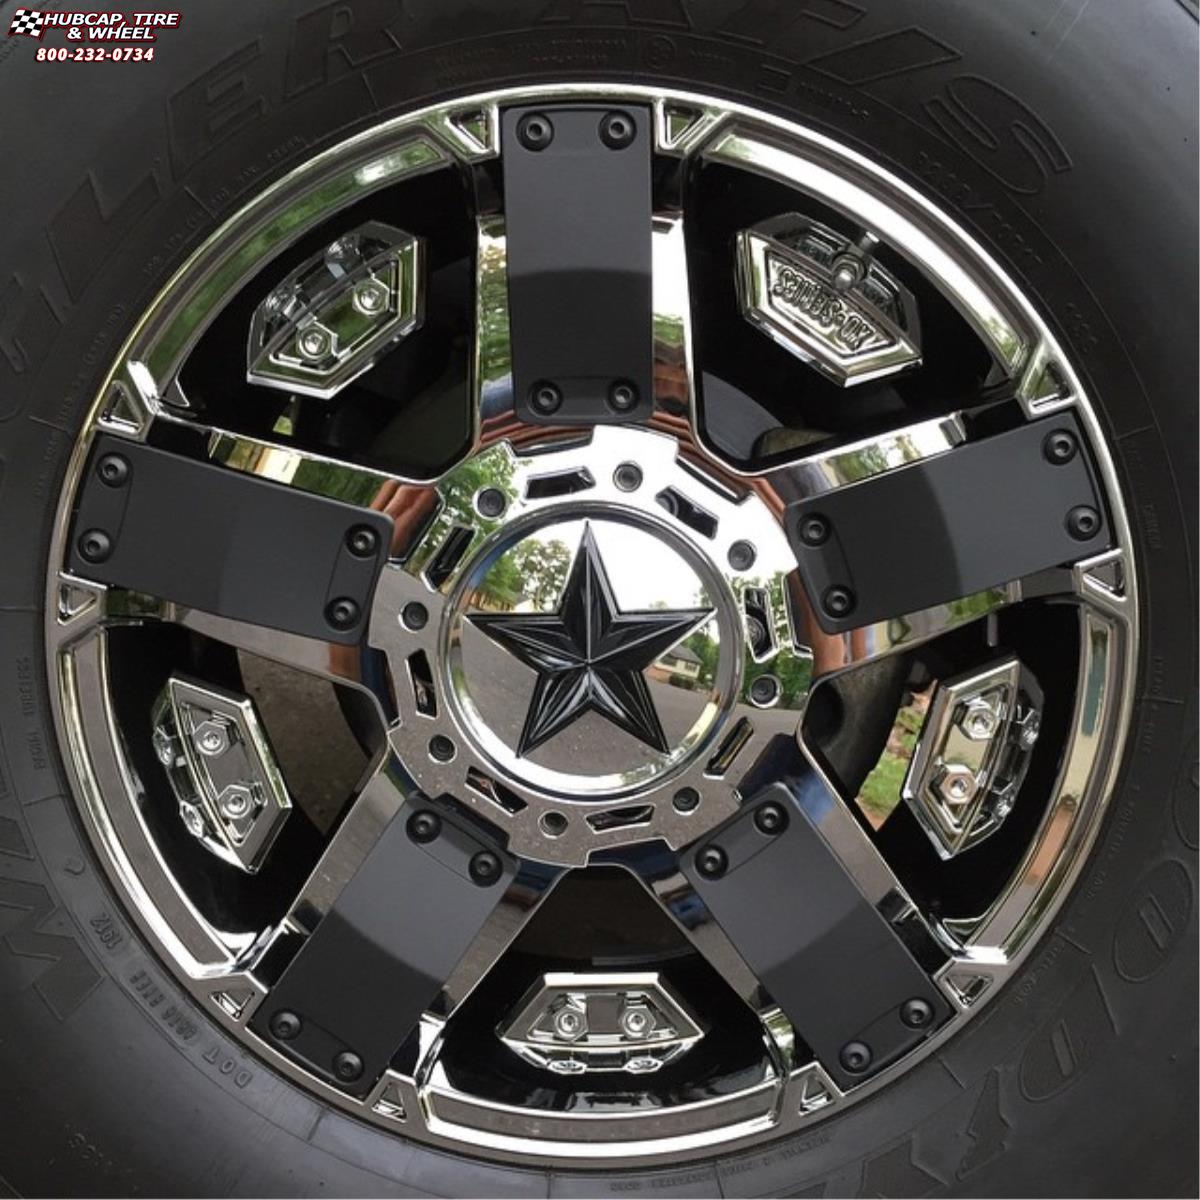 vehicle gallery/chevrolet silverado 1500 xd series xd811 rockstar 2  Chrome Black Inserts wheels and rims